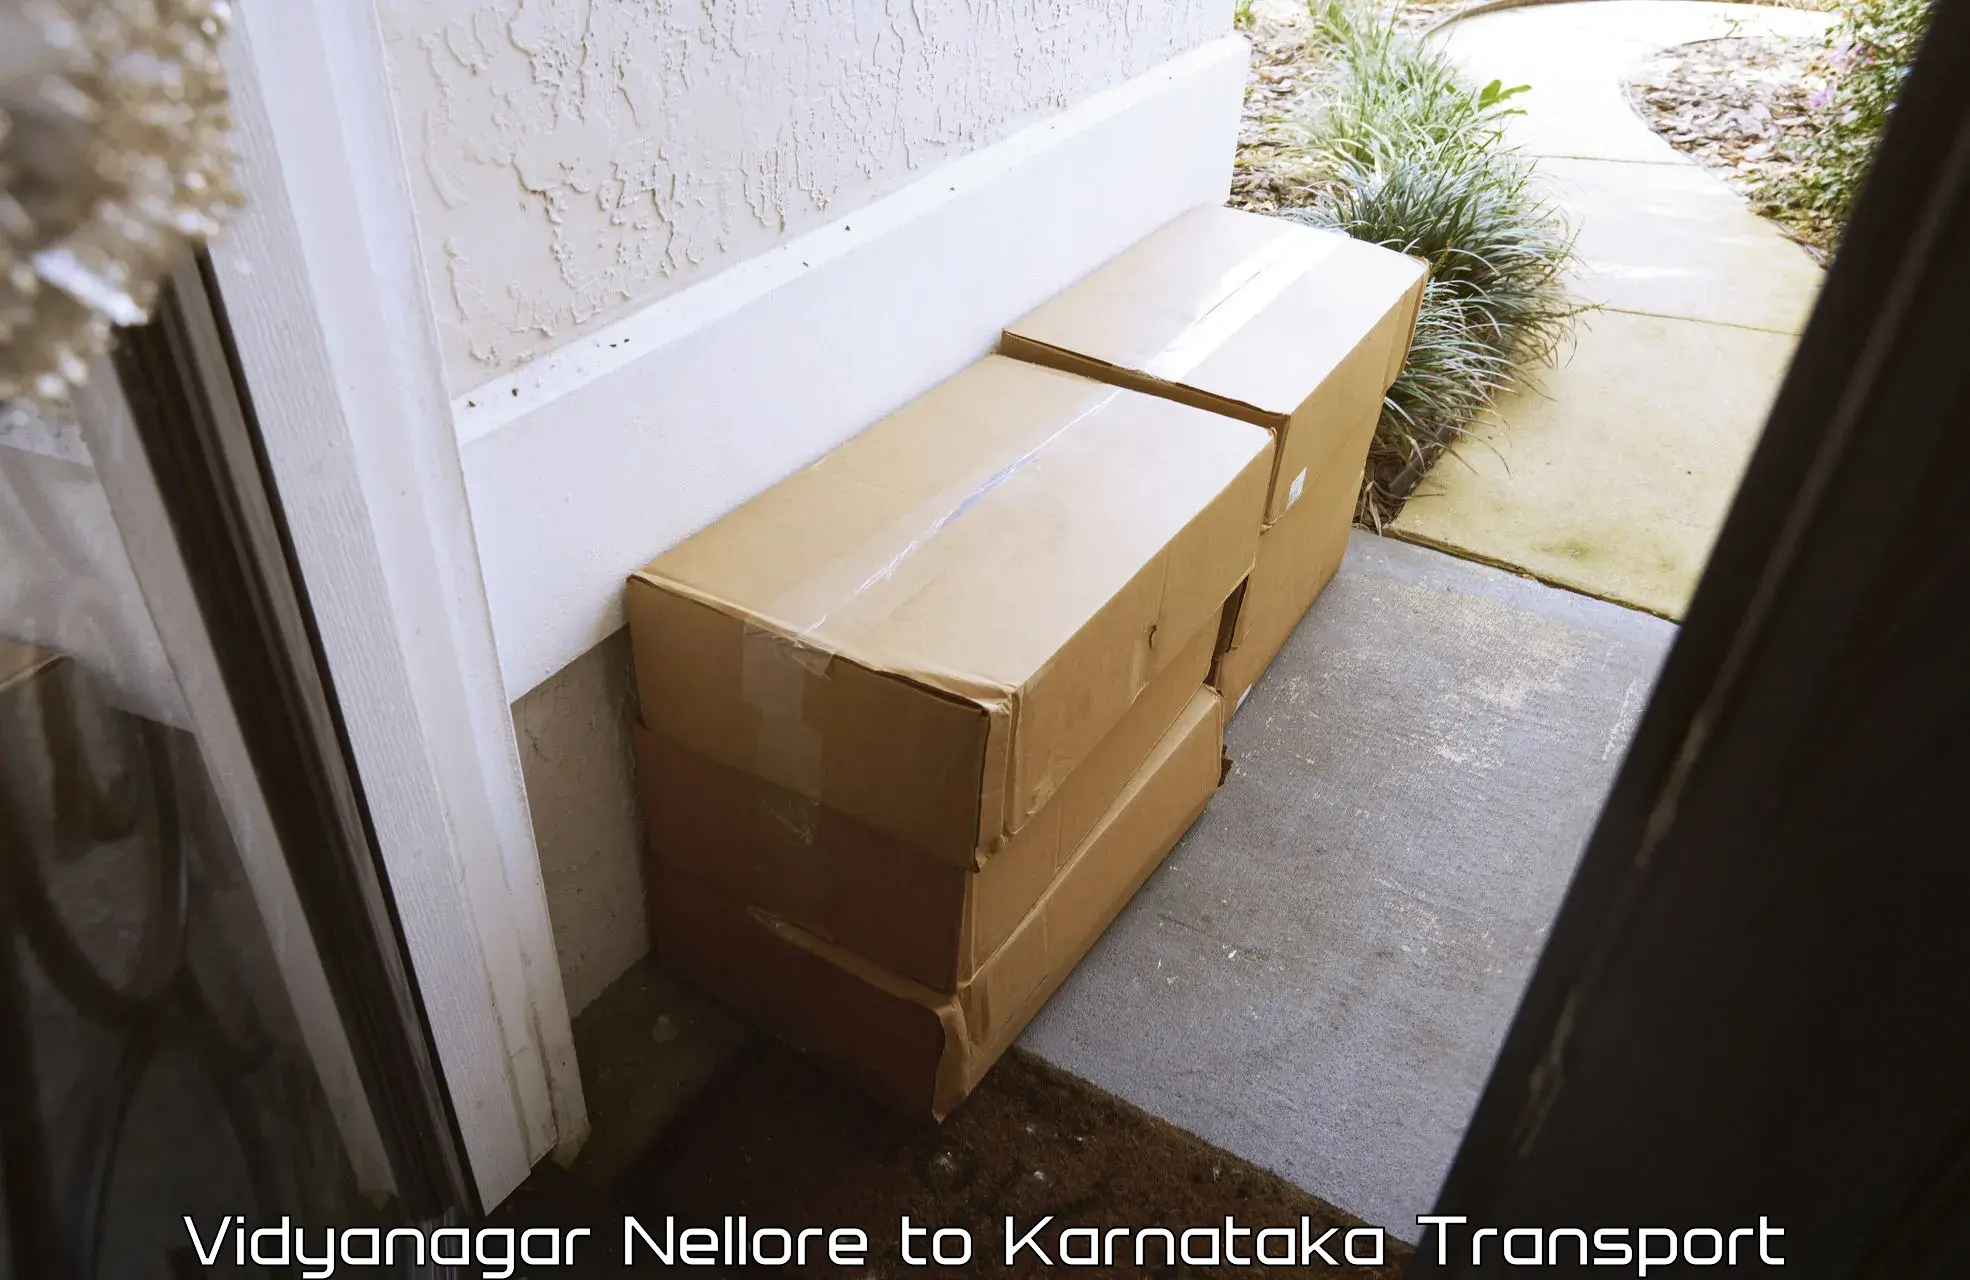 Bike shipping service Vidyanagar Nellore to Bangalore